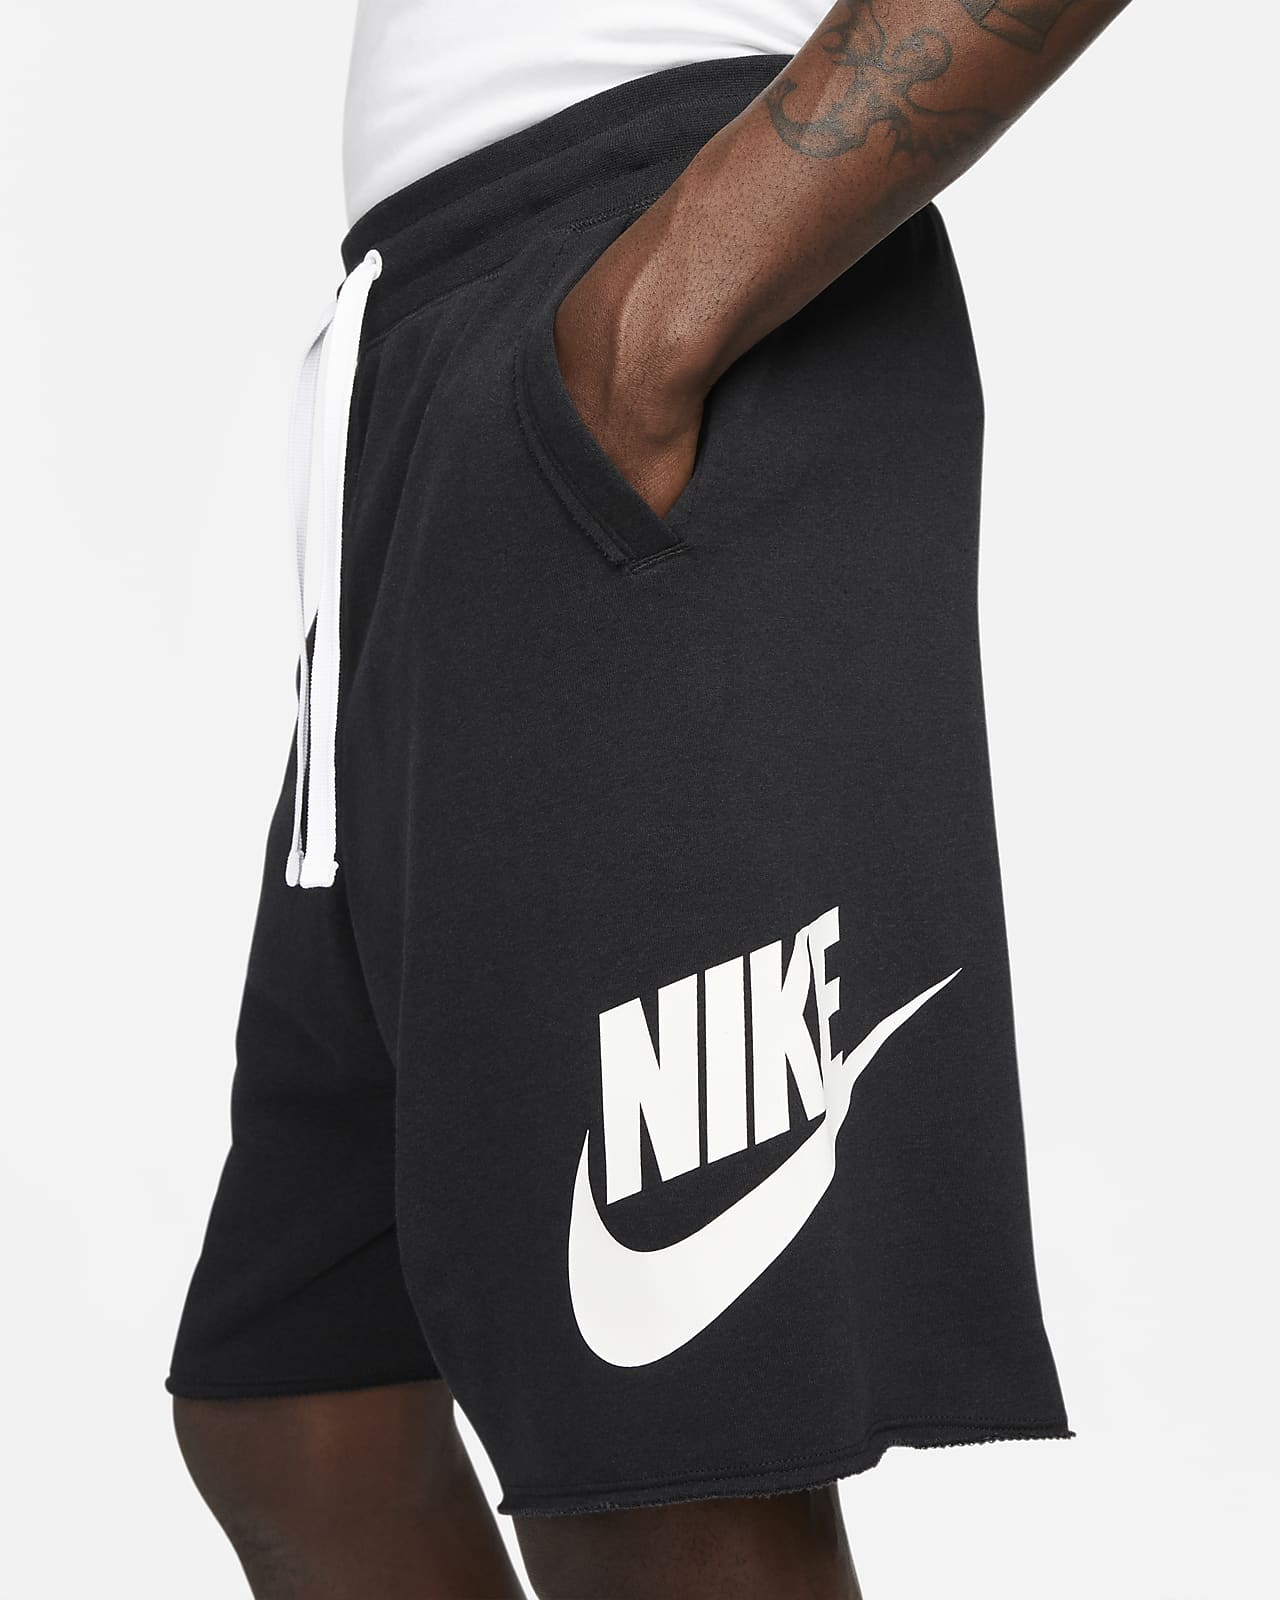 Nike Sweatshorts for Men, Online Sale up to 41% off